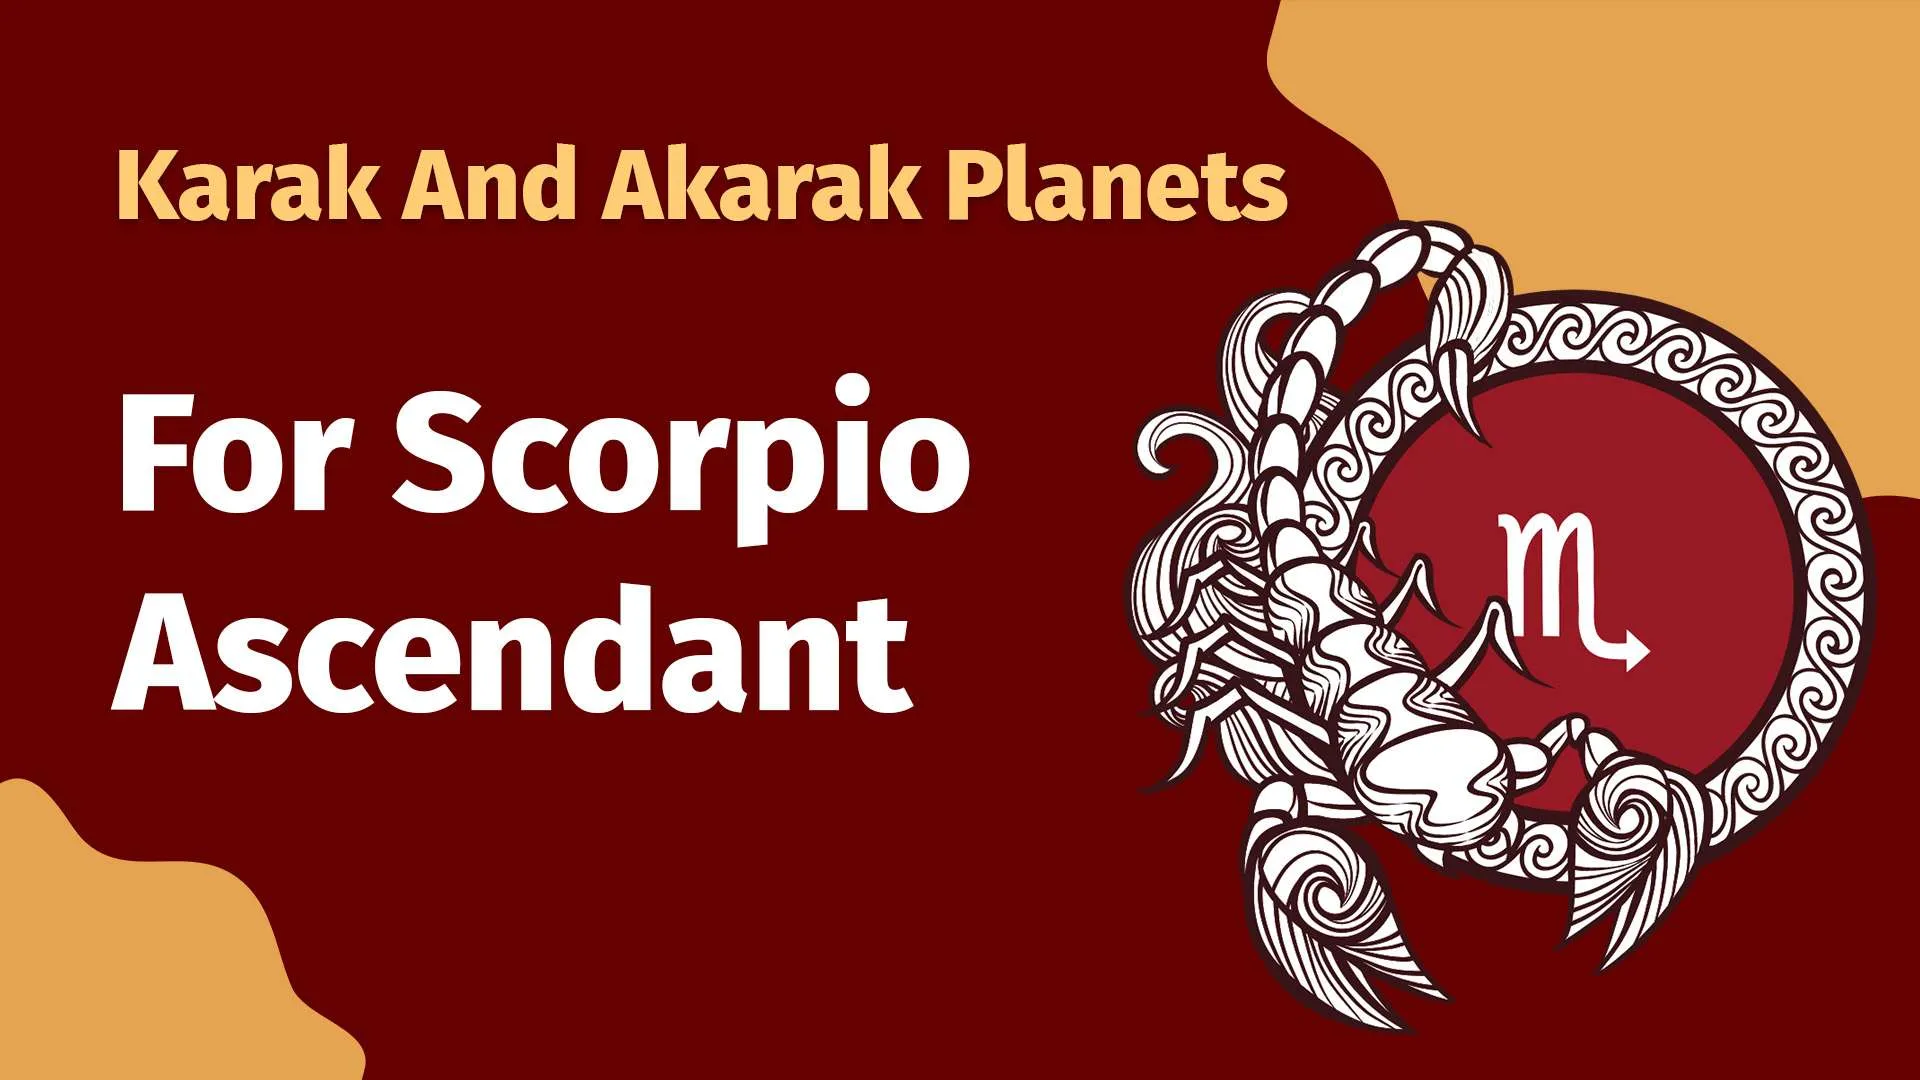 Karak and Akarak Planets for Scorpio Ascendants